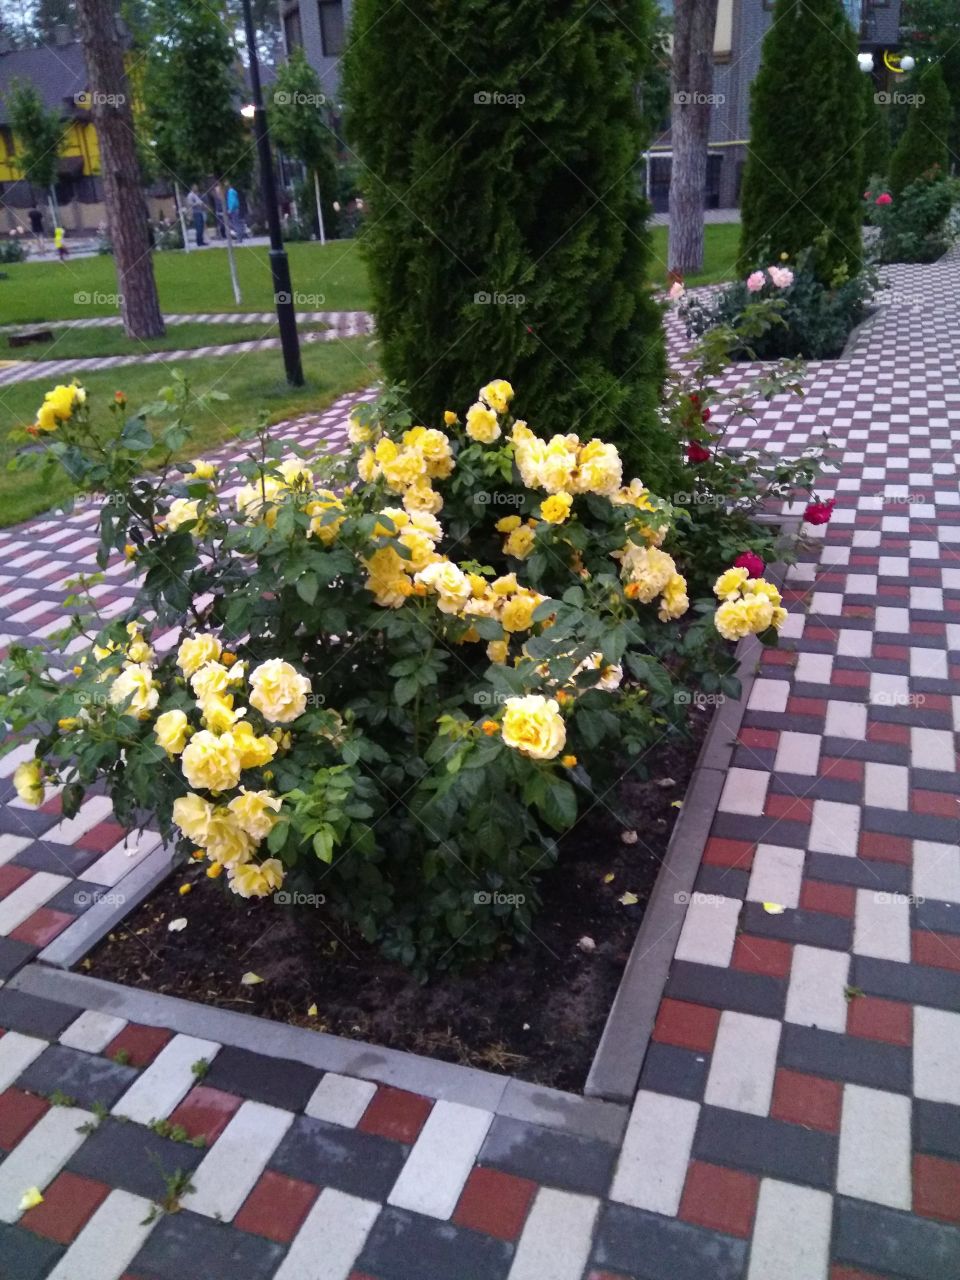 Жёлтые розы на придомовой территории радуют взгляд.
Yellow roses in the local area are pleasing to the eye.